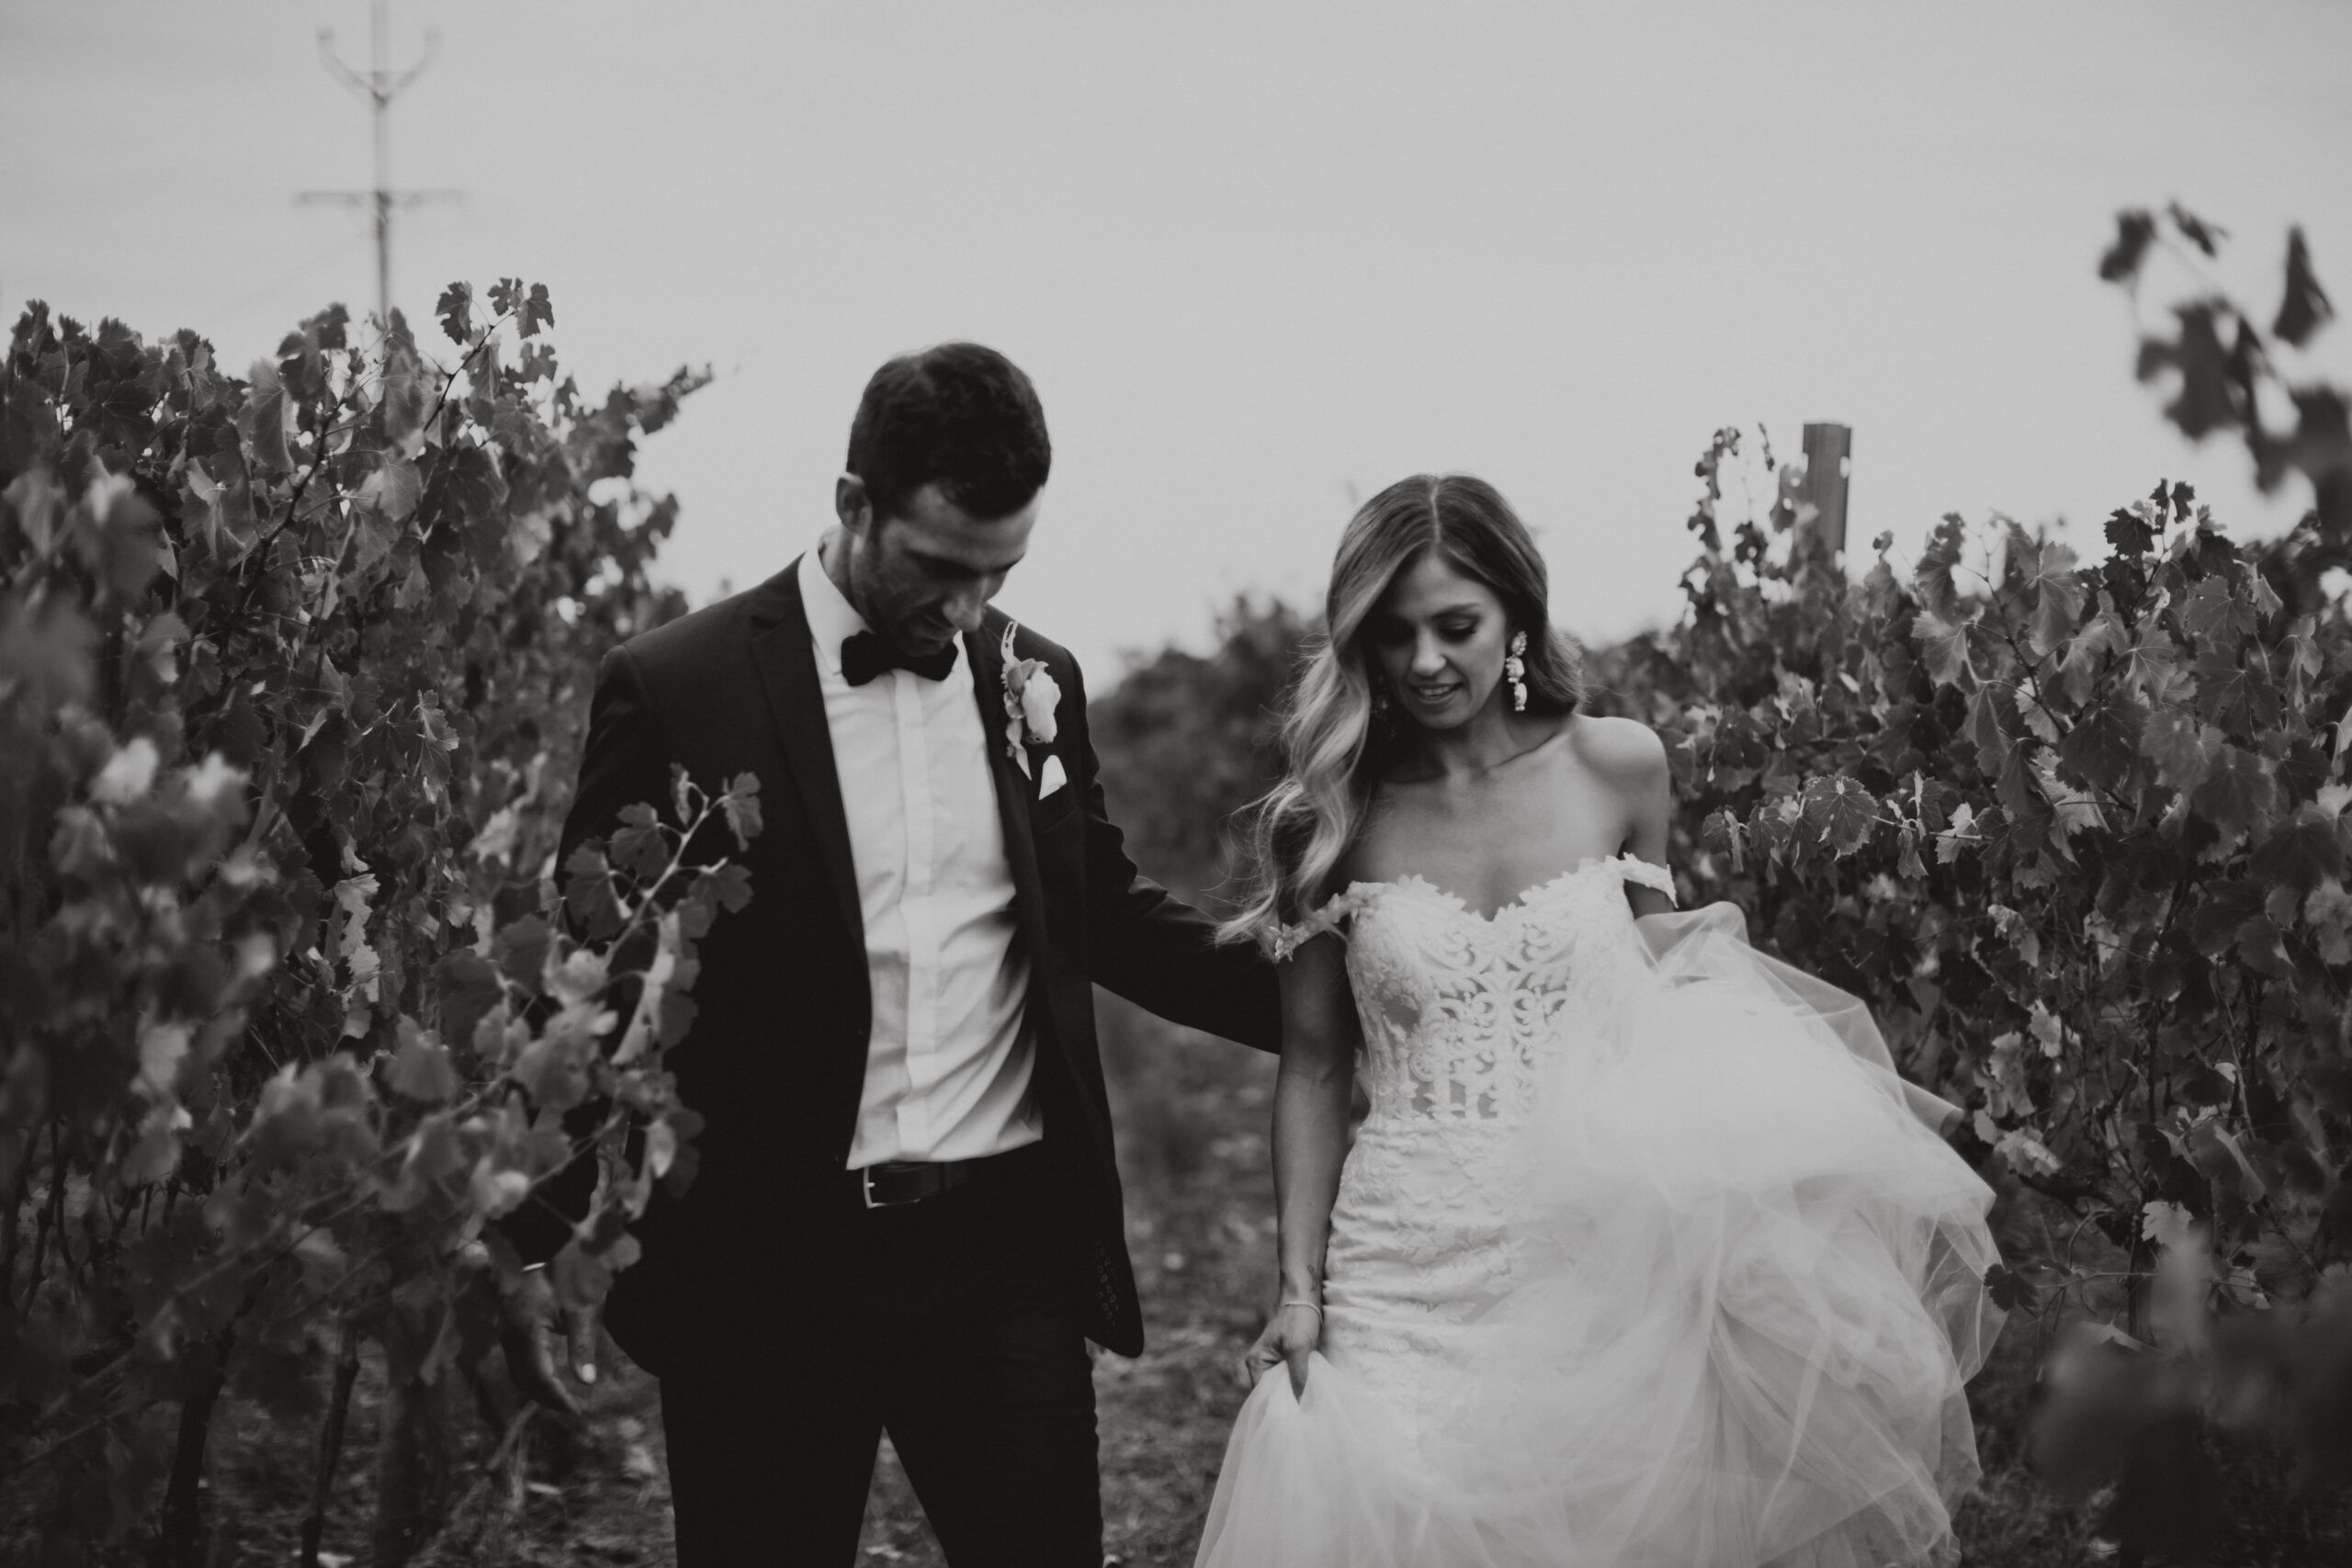 Couple portrait - bride and groom walking through a vineyard.